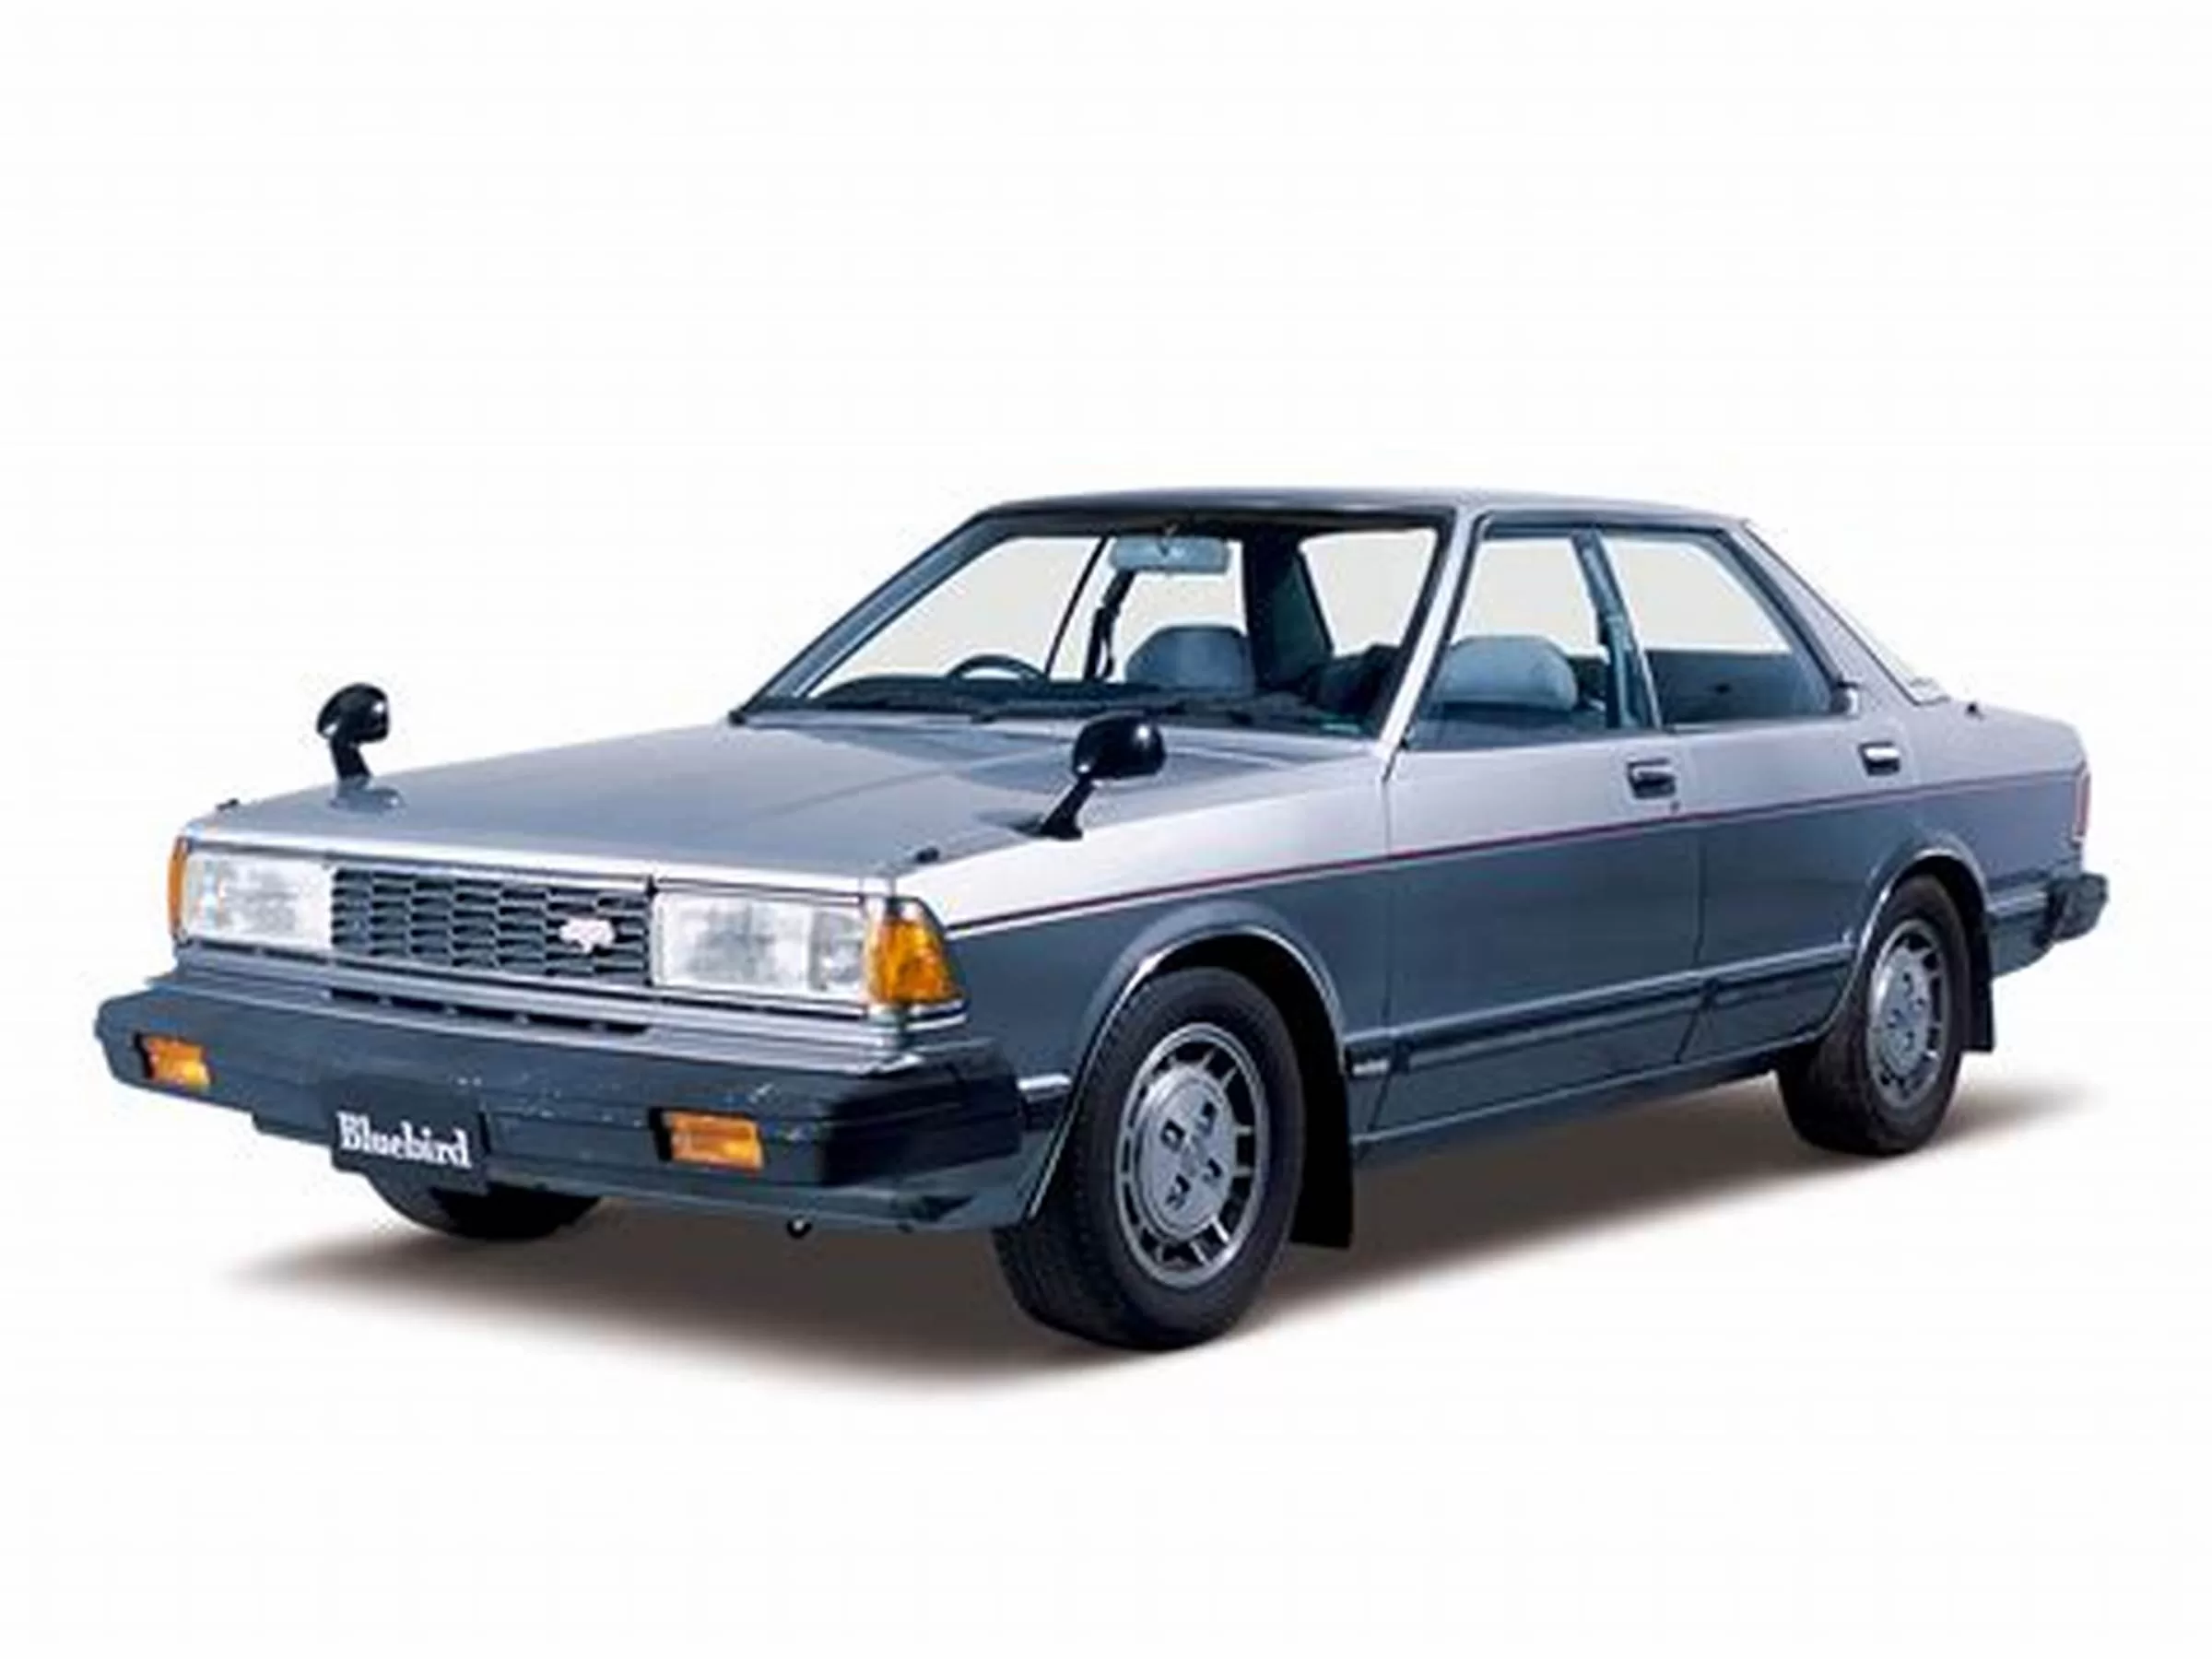 Datsun 1800 SSS – The Attainable Japanese Sports Car插图5